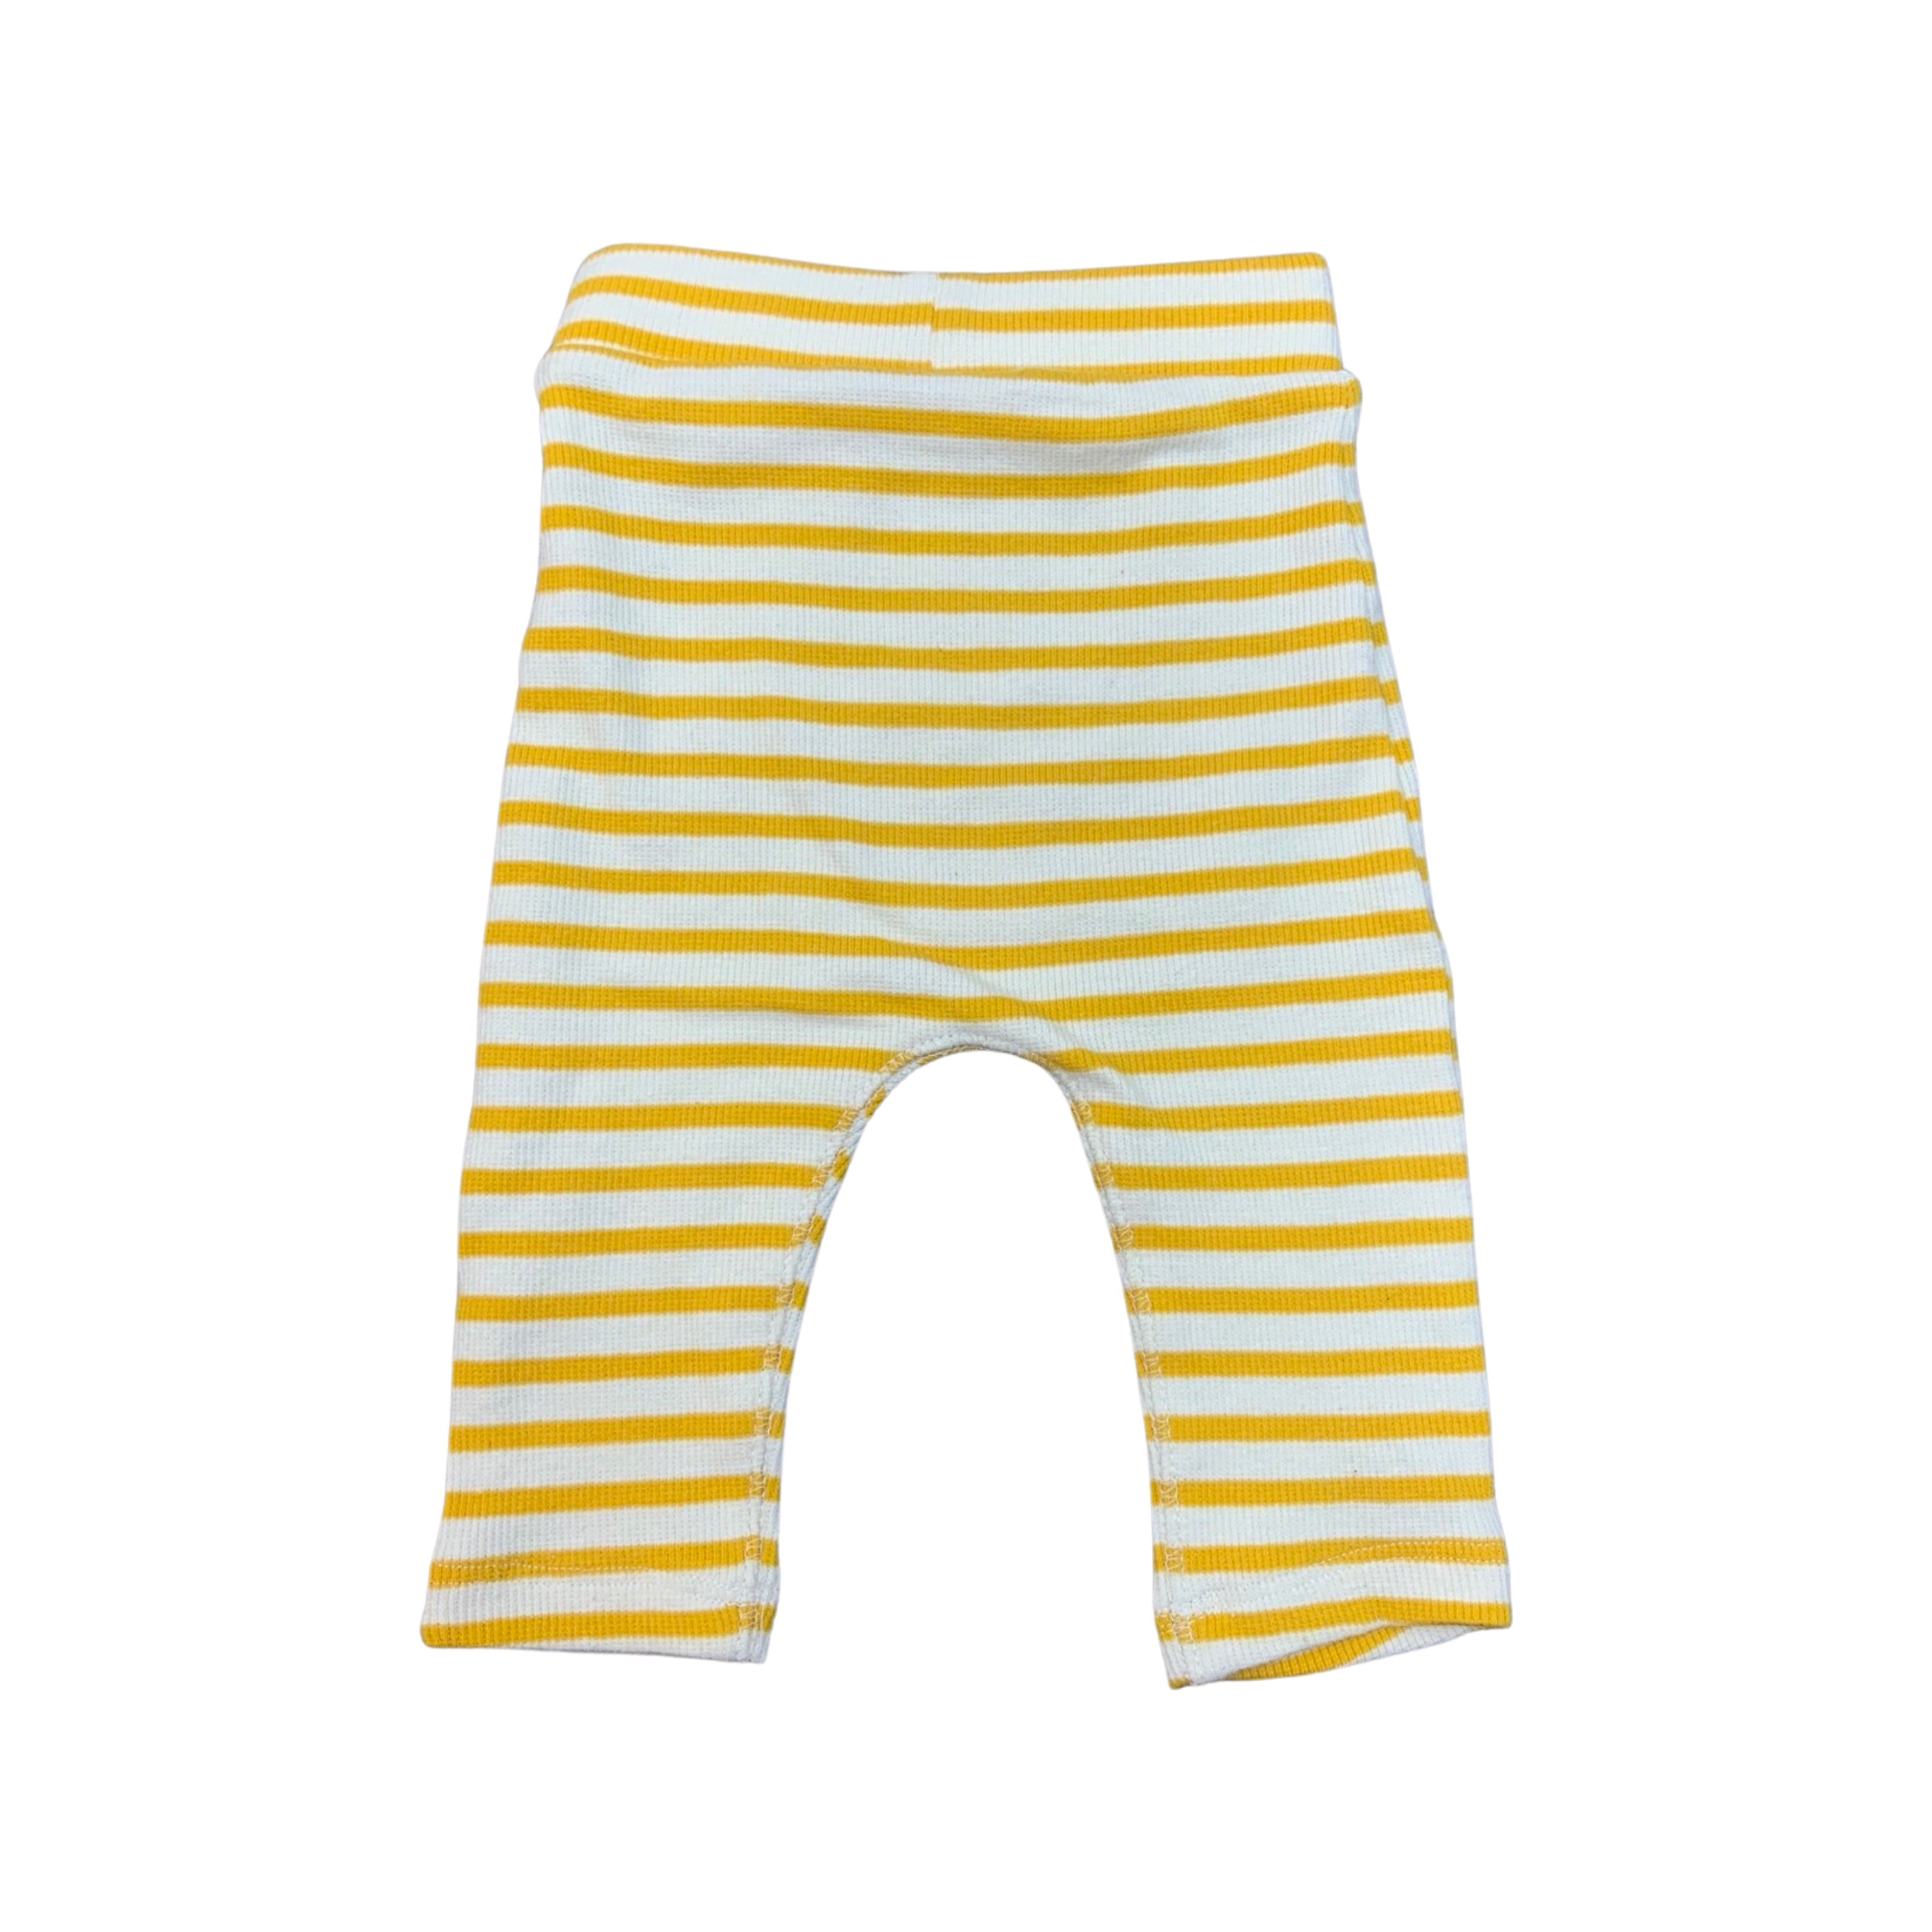 Mini Club Striped Knit Leggings Baby Boy 0-3 Months/14.3lbs